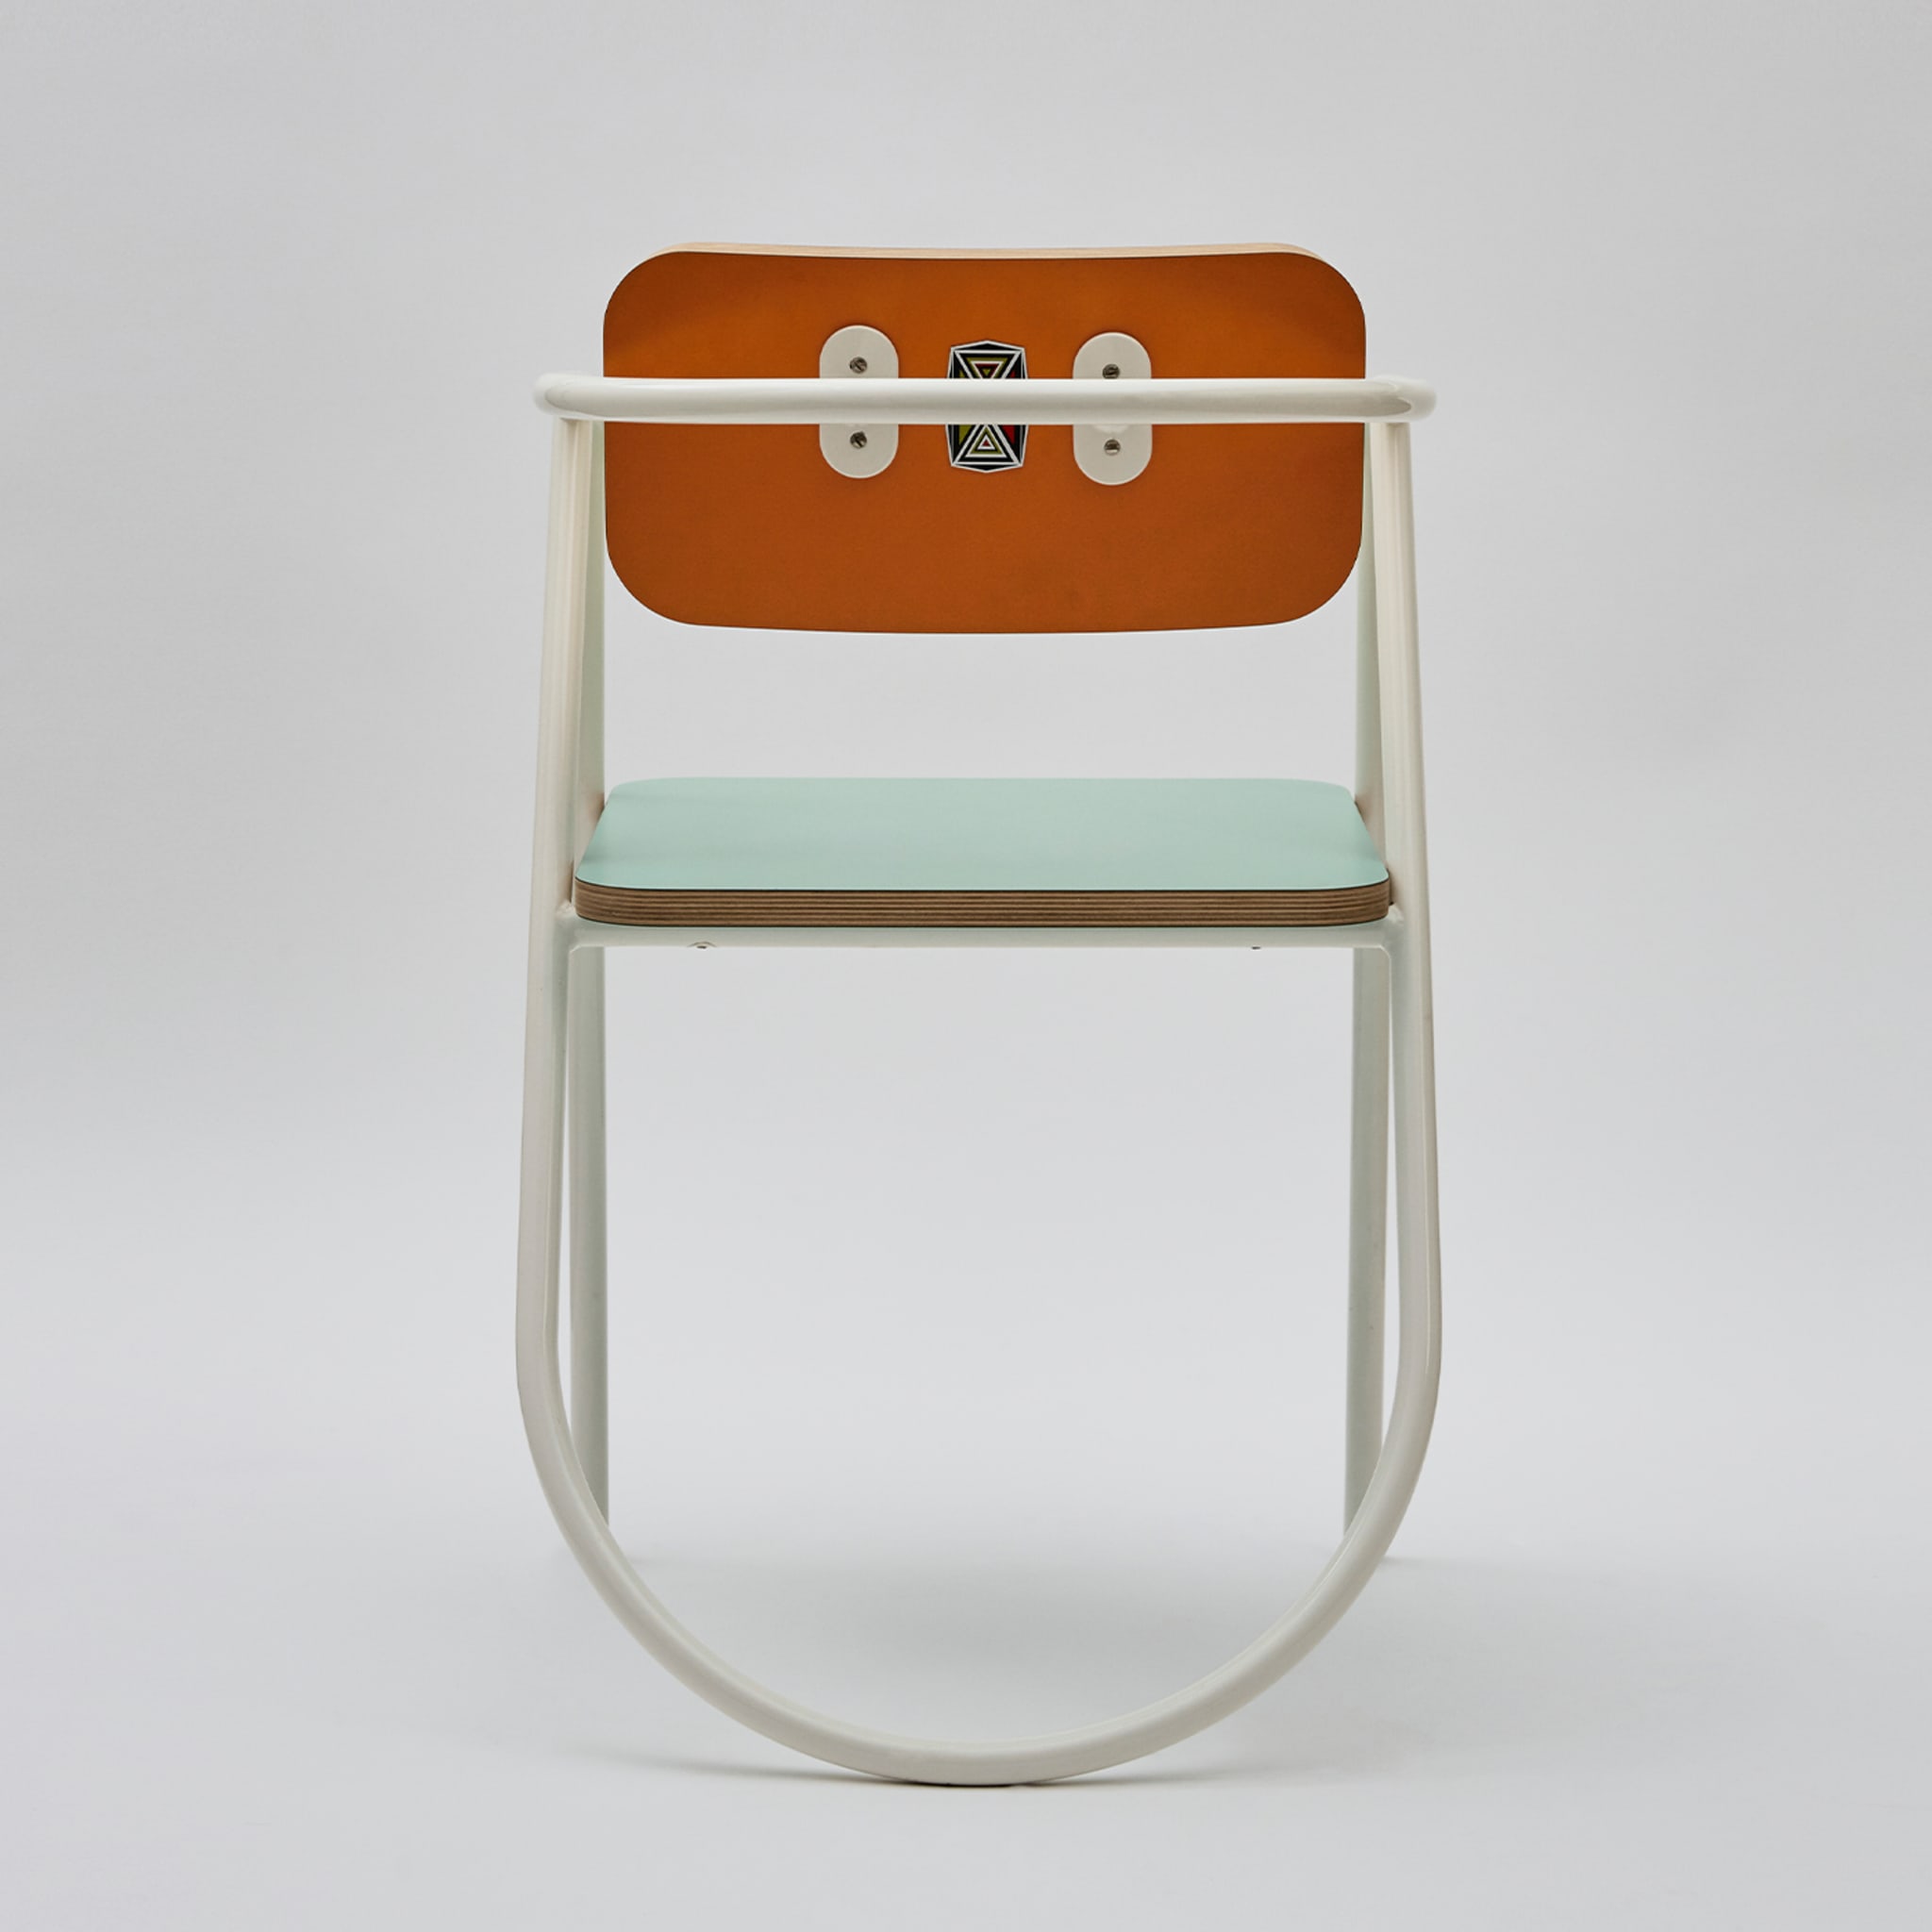 La Misciù White/Teal/Orange Chair  - Alternative view 3